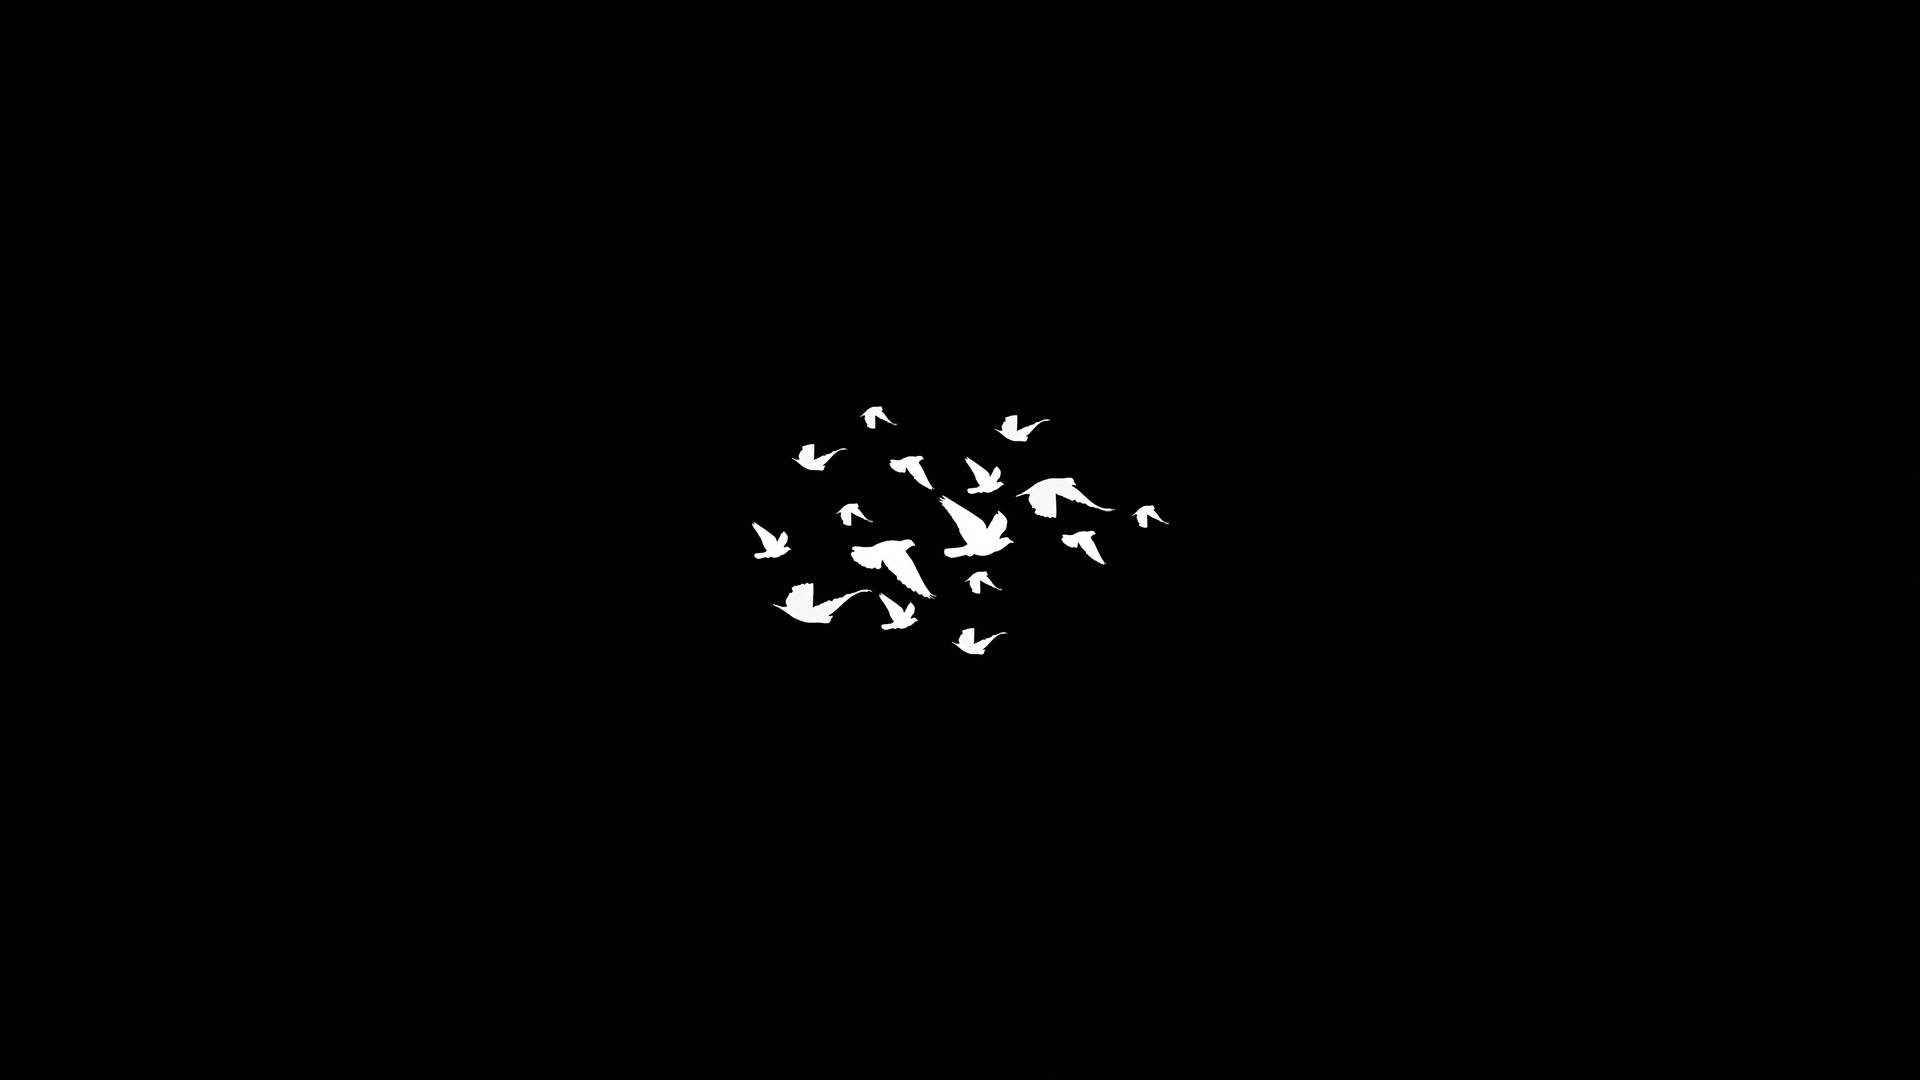 Dark Laptop Birds Compressed In The Center Wallpaper